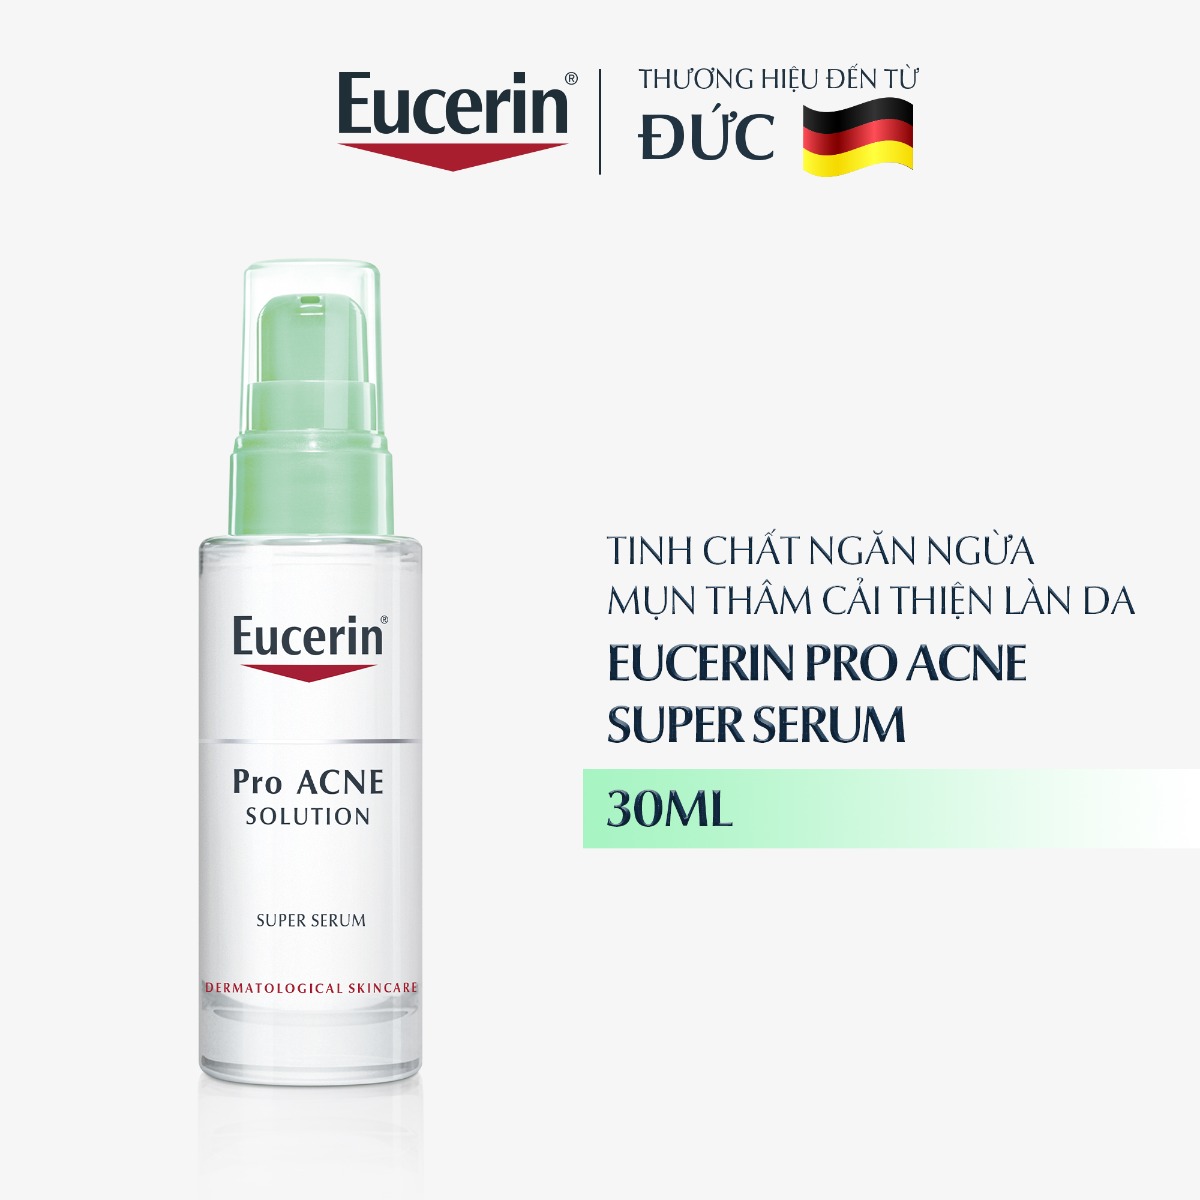  Eucerin Pro Acne Super Serum